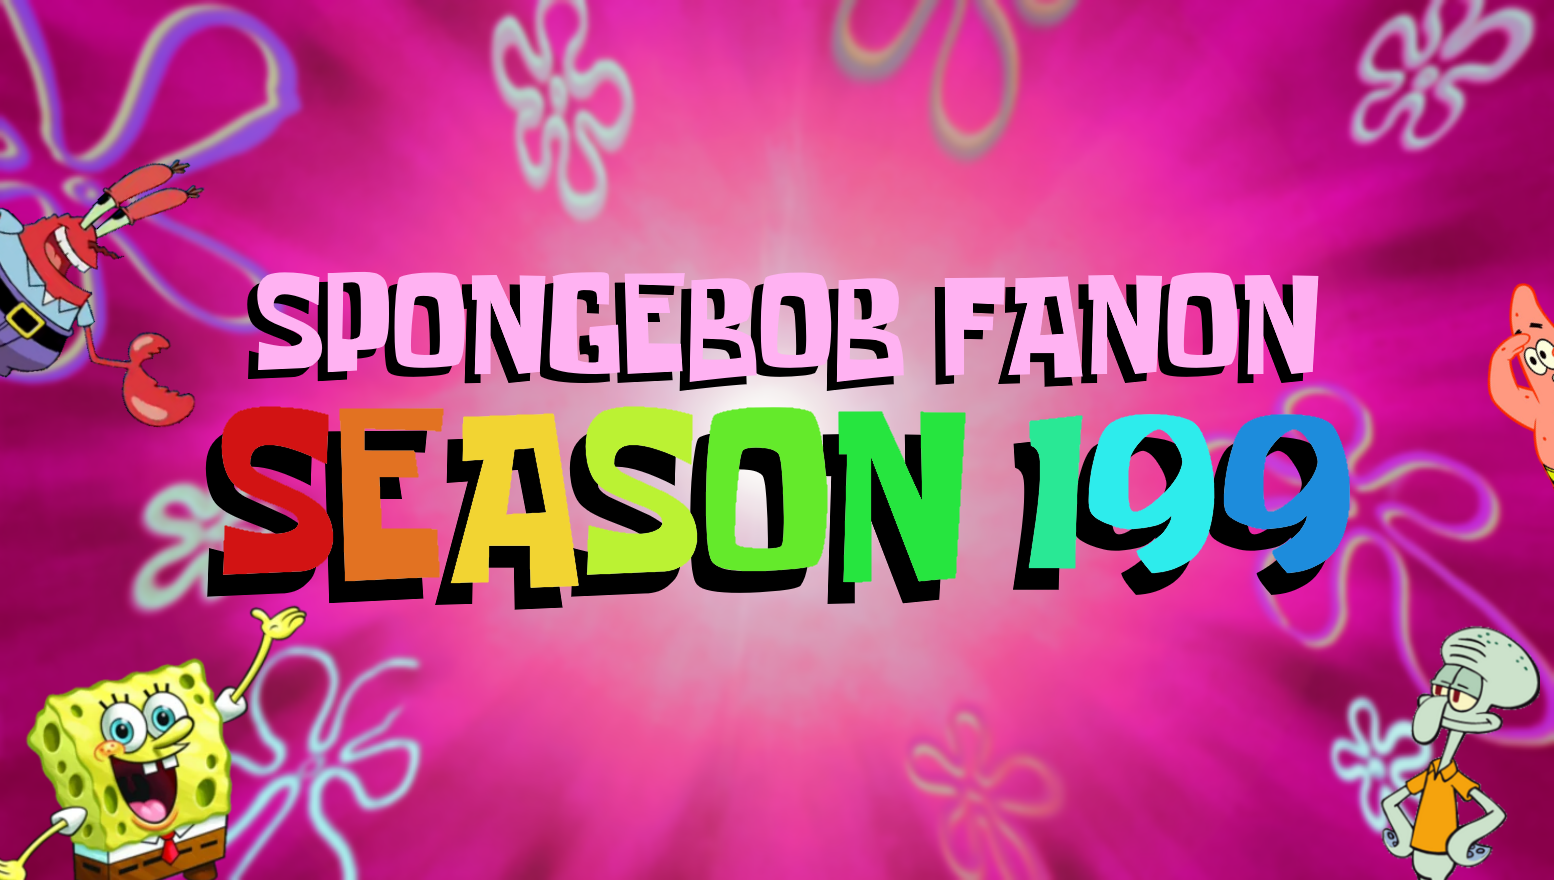 spongebob season 12 wiki